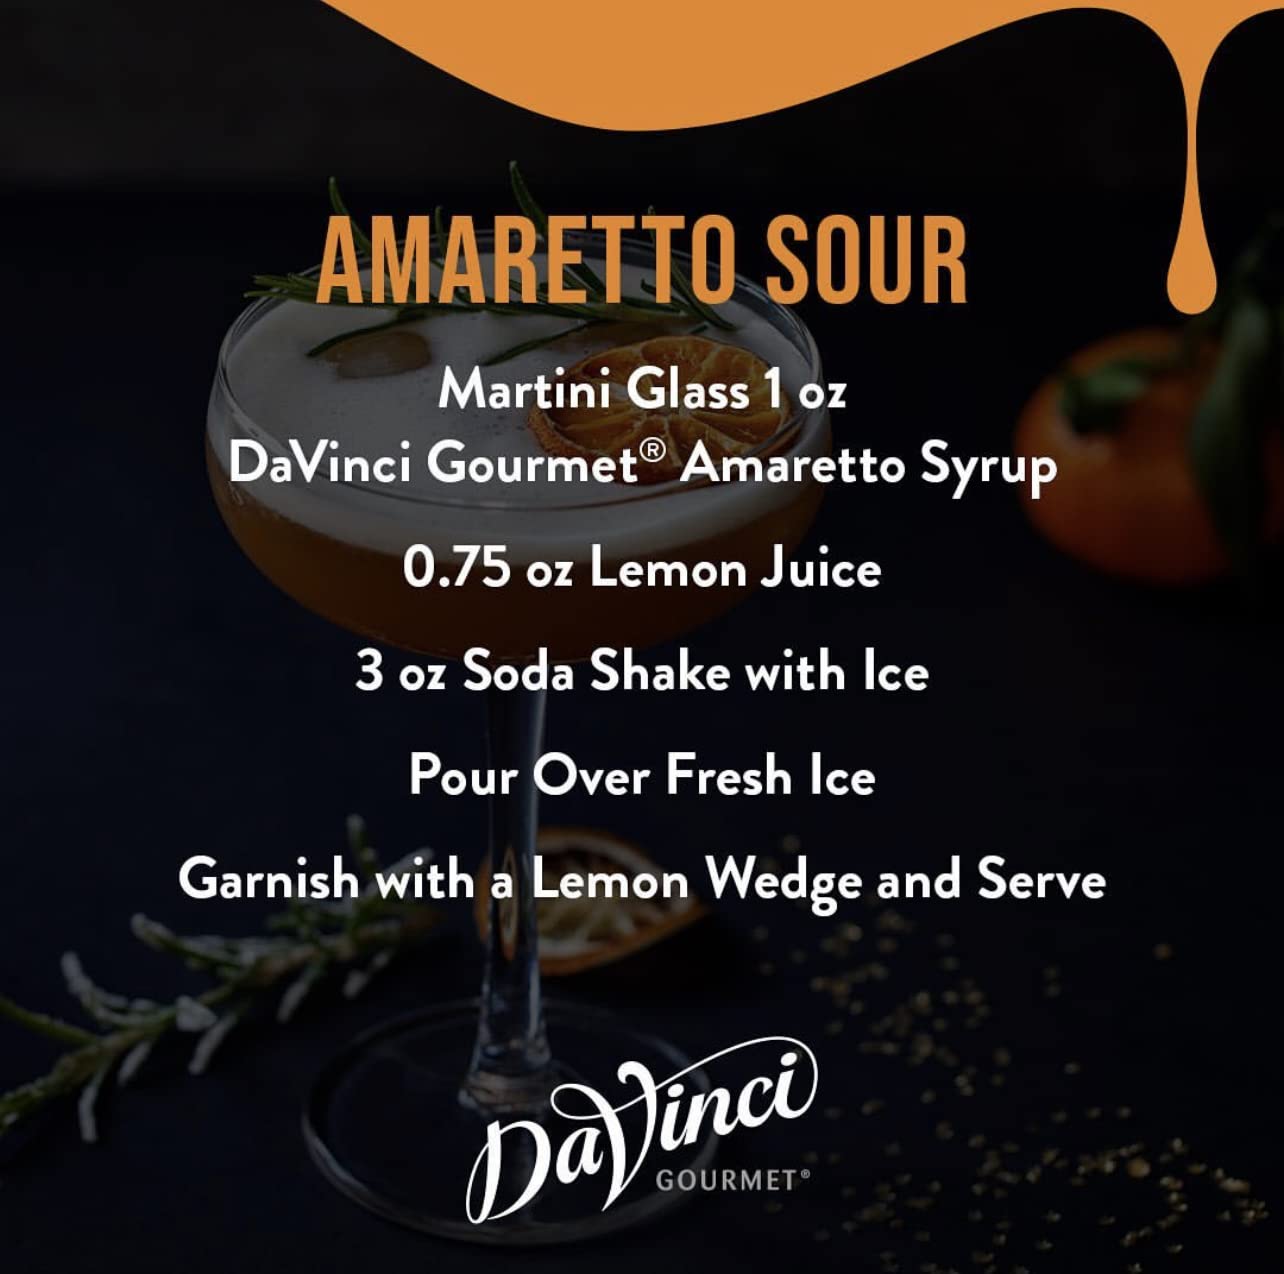 DaVinci Gourmet Classic Amaretto